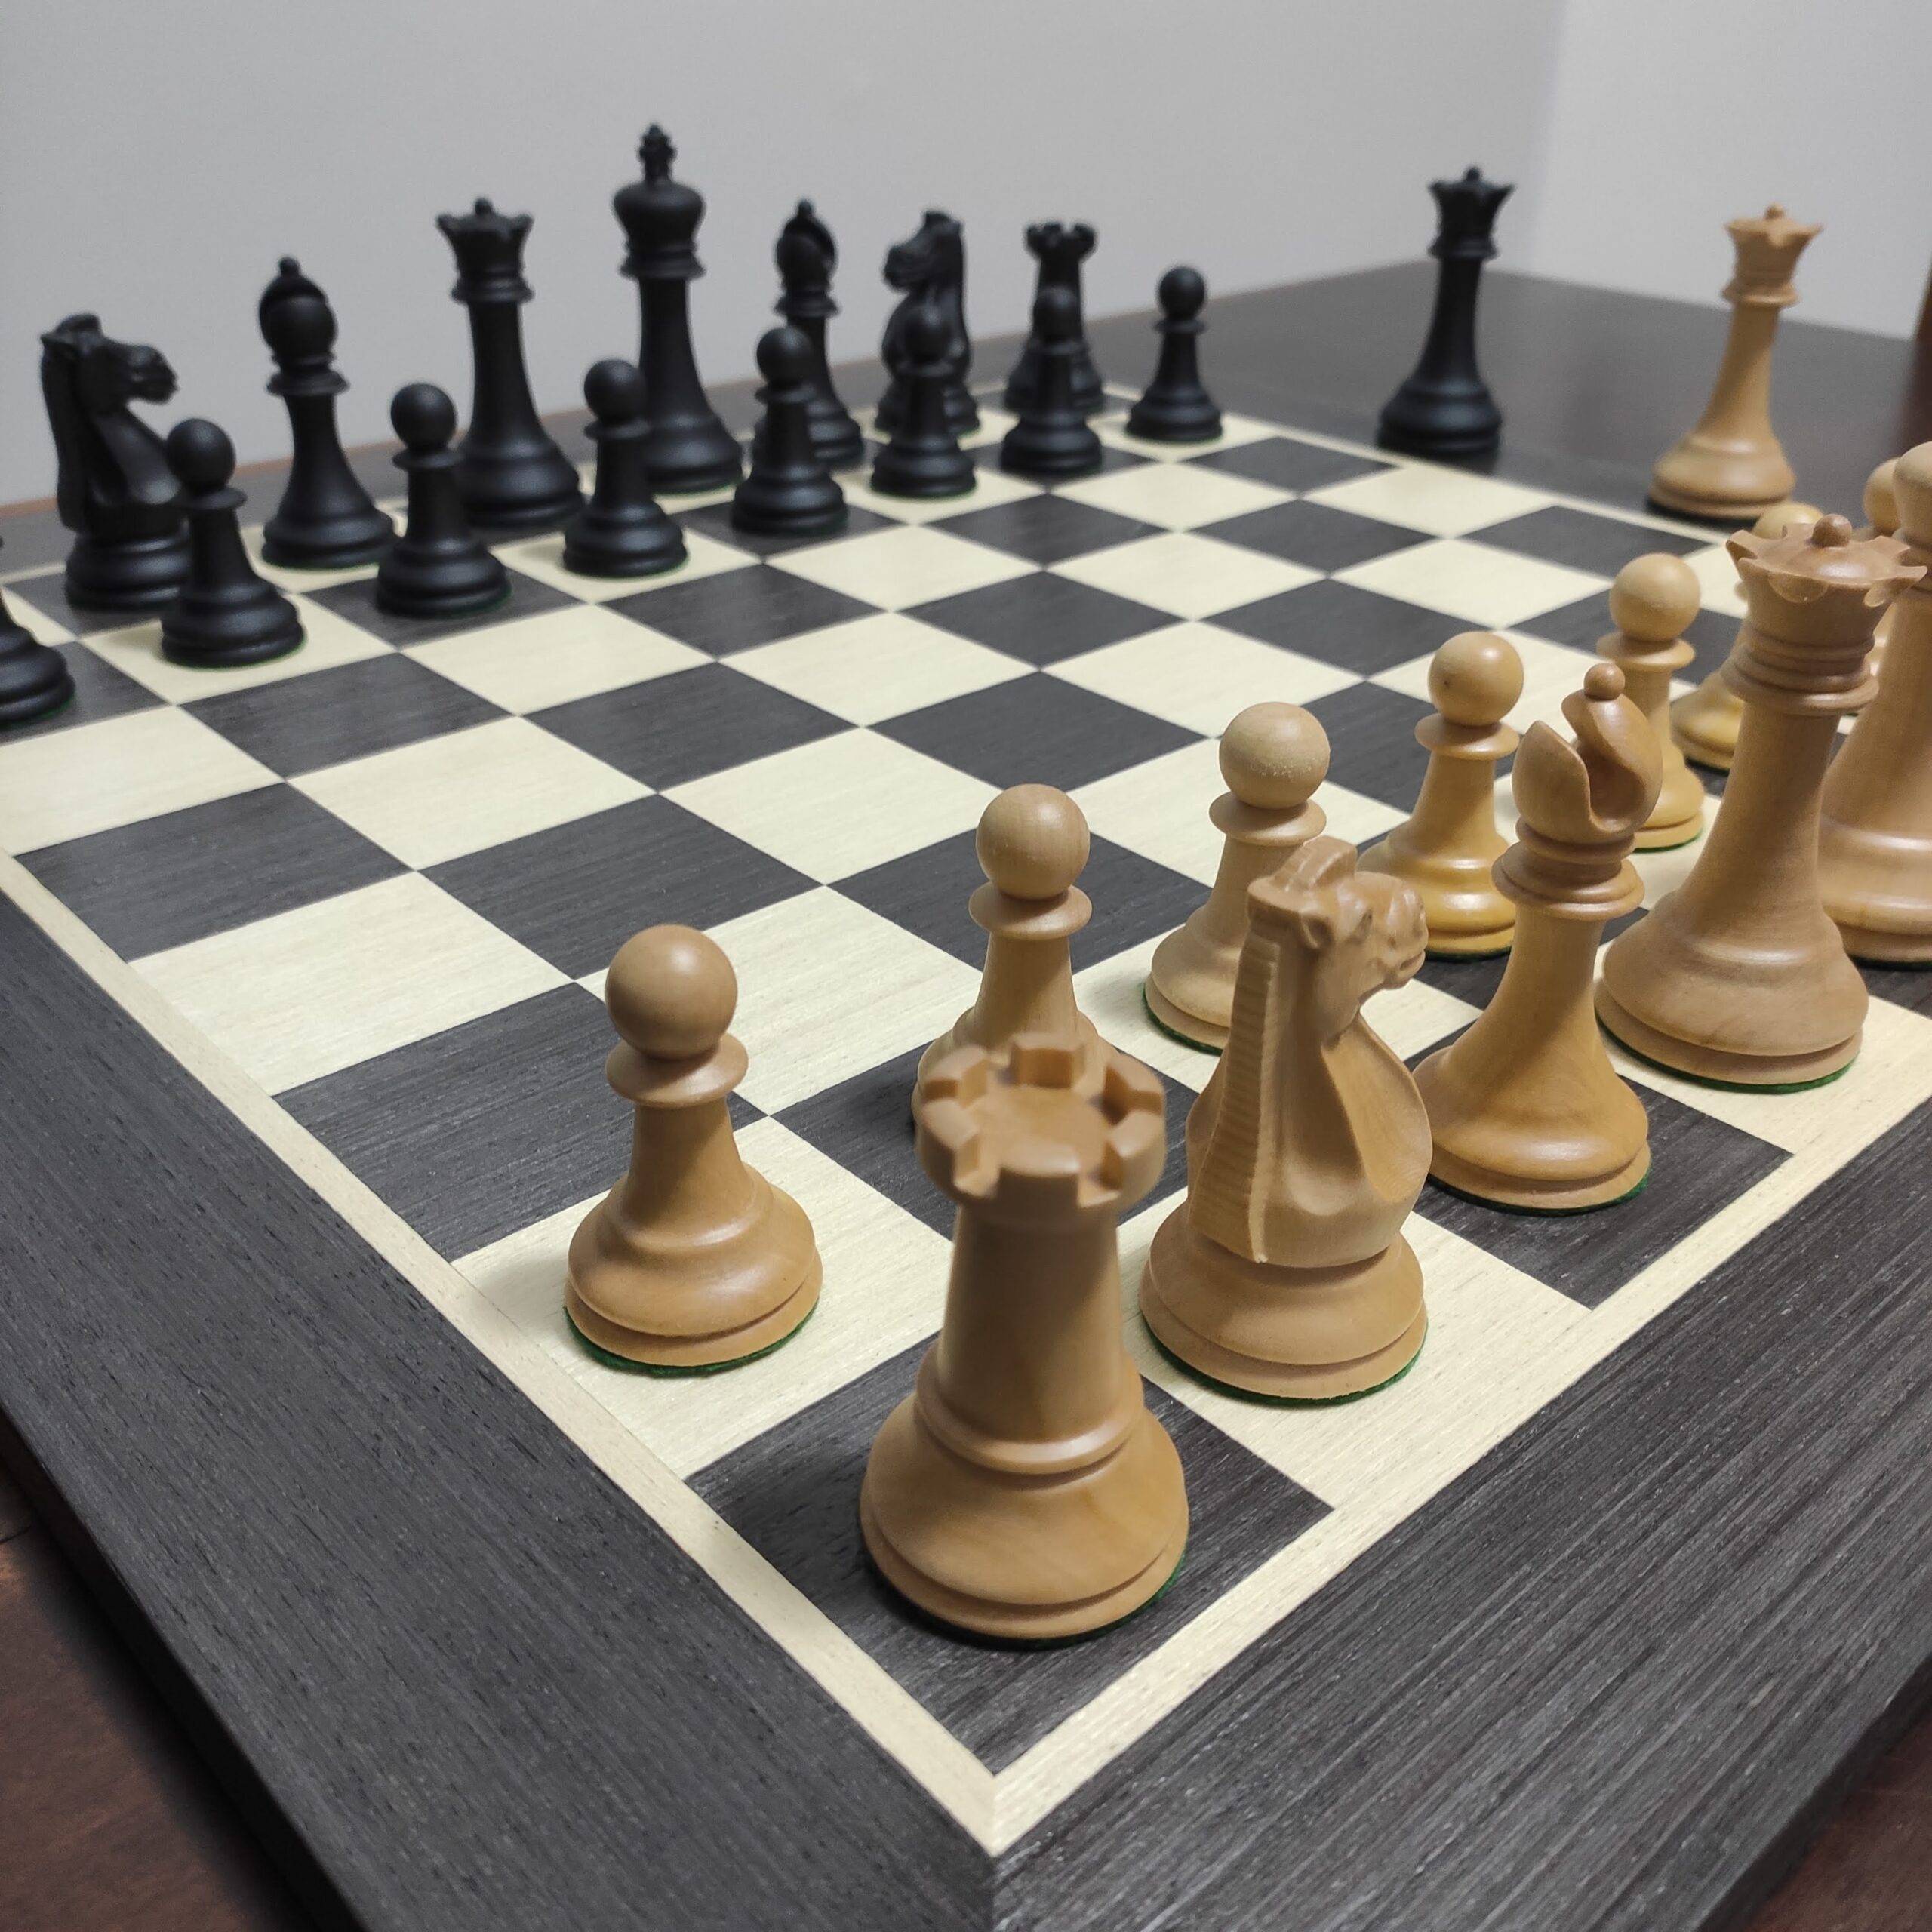 Jogo de xadrez Staunton Profissional - peças, tabuleiro e 2 damas